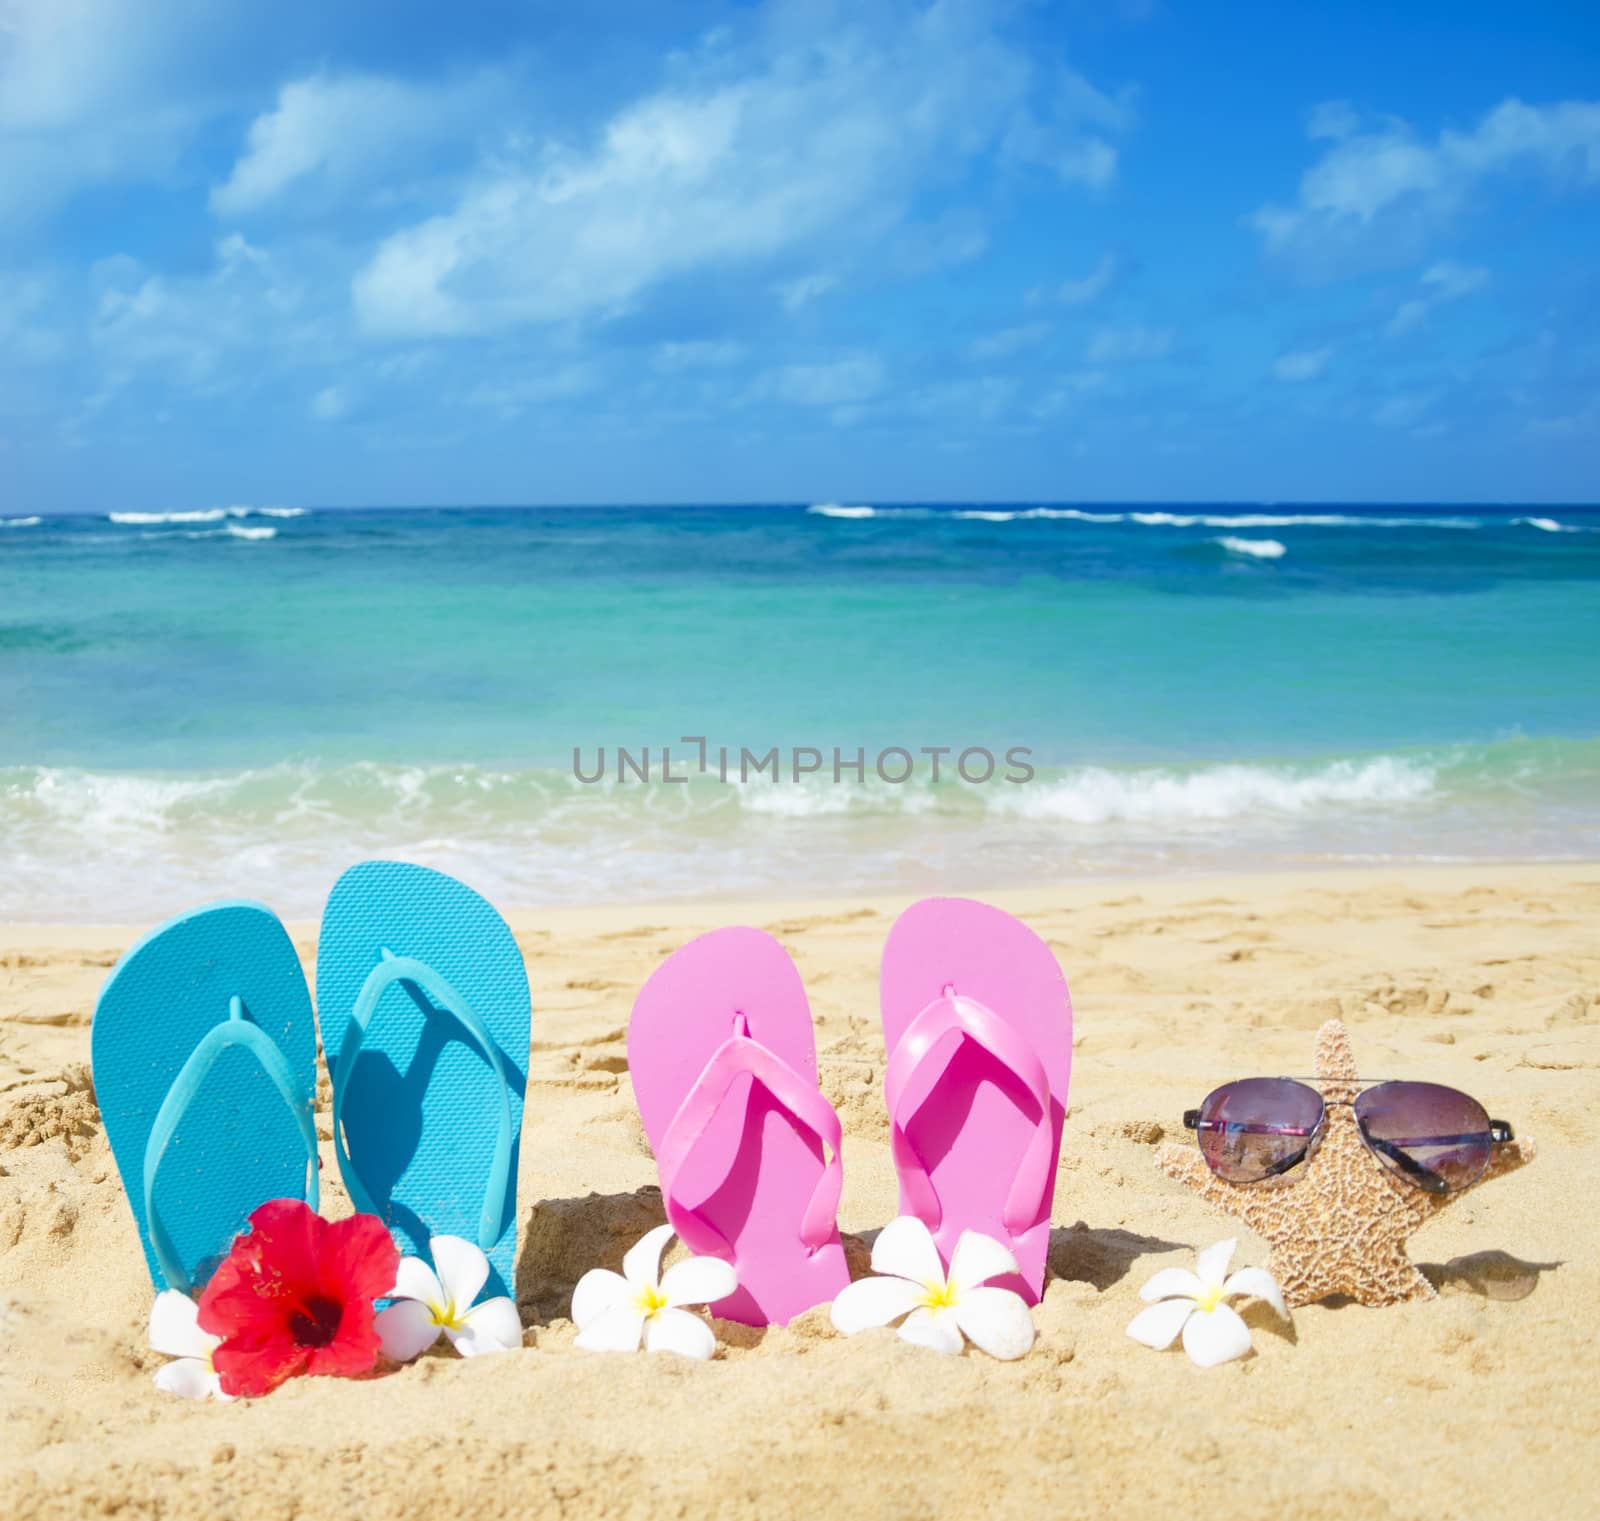 Flip flops and starfish with sunglasses with tropical flowers on sandy beach in Hawaii, Kauai